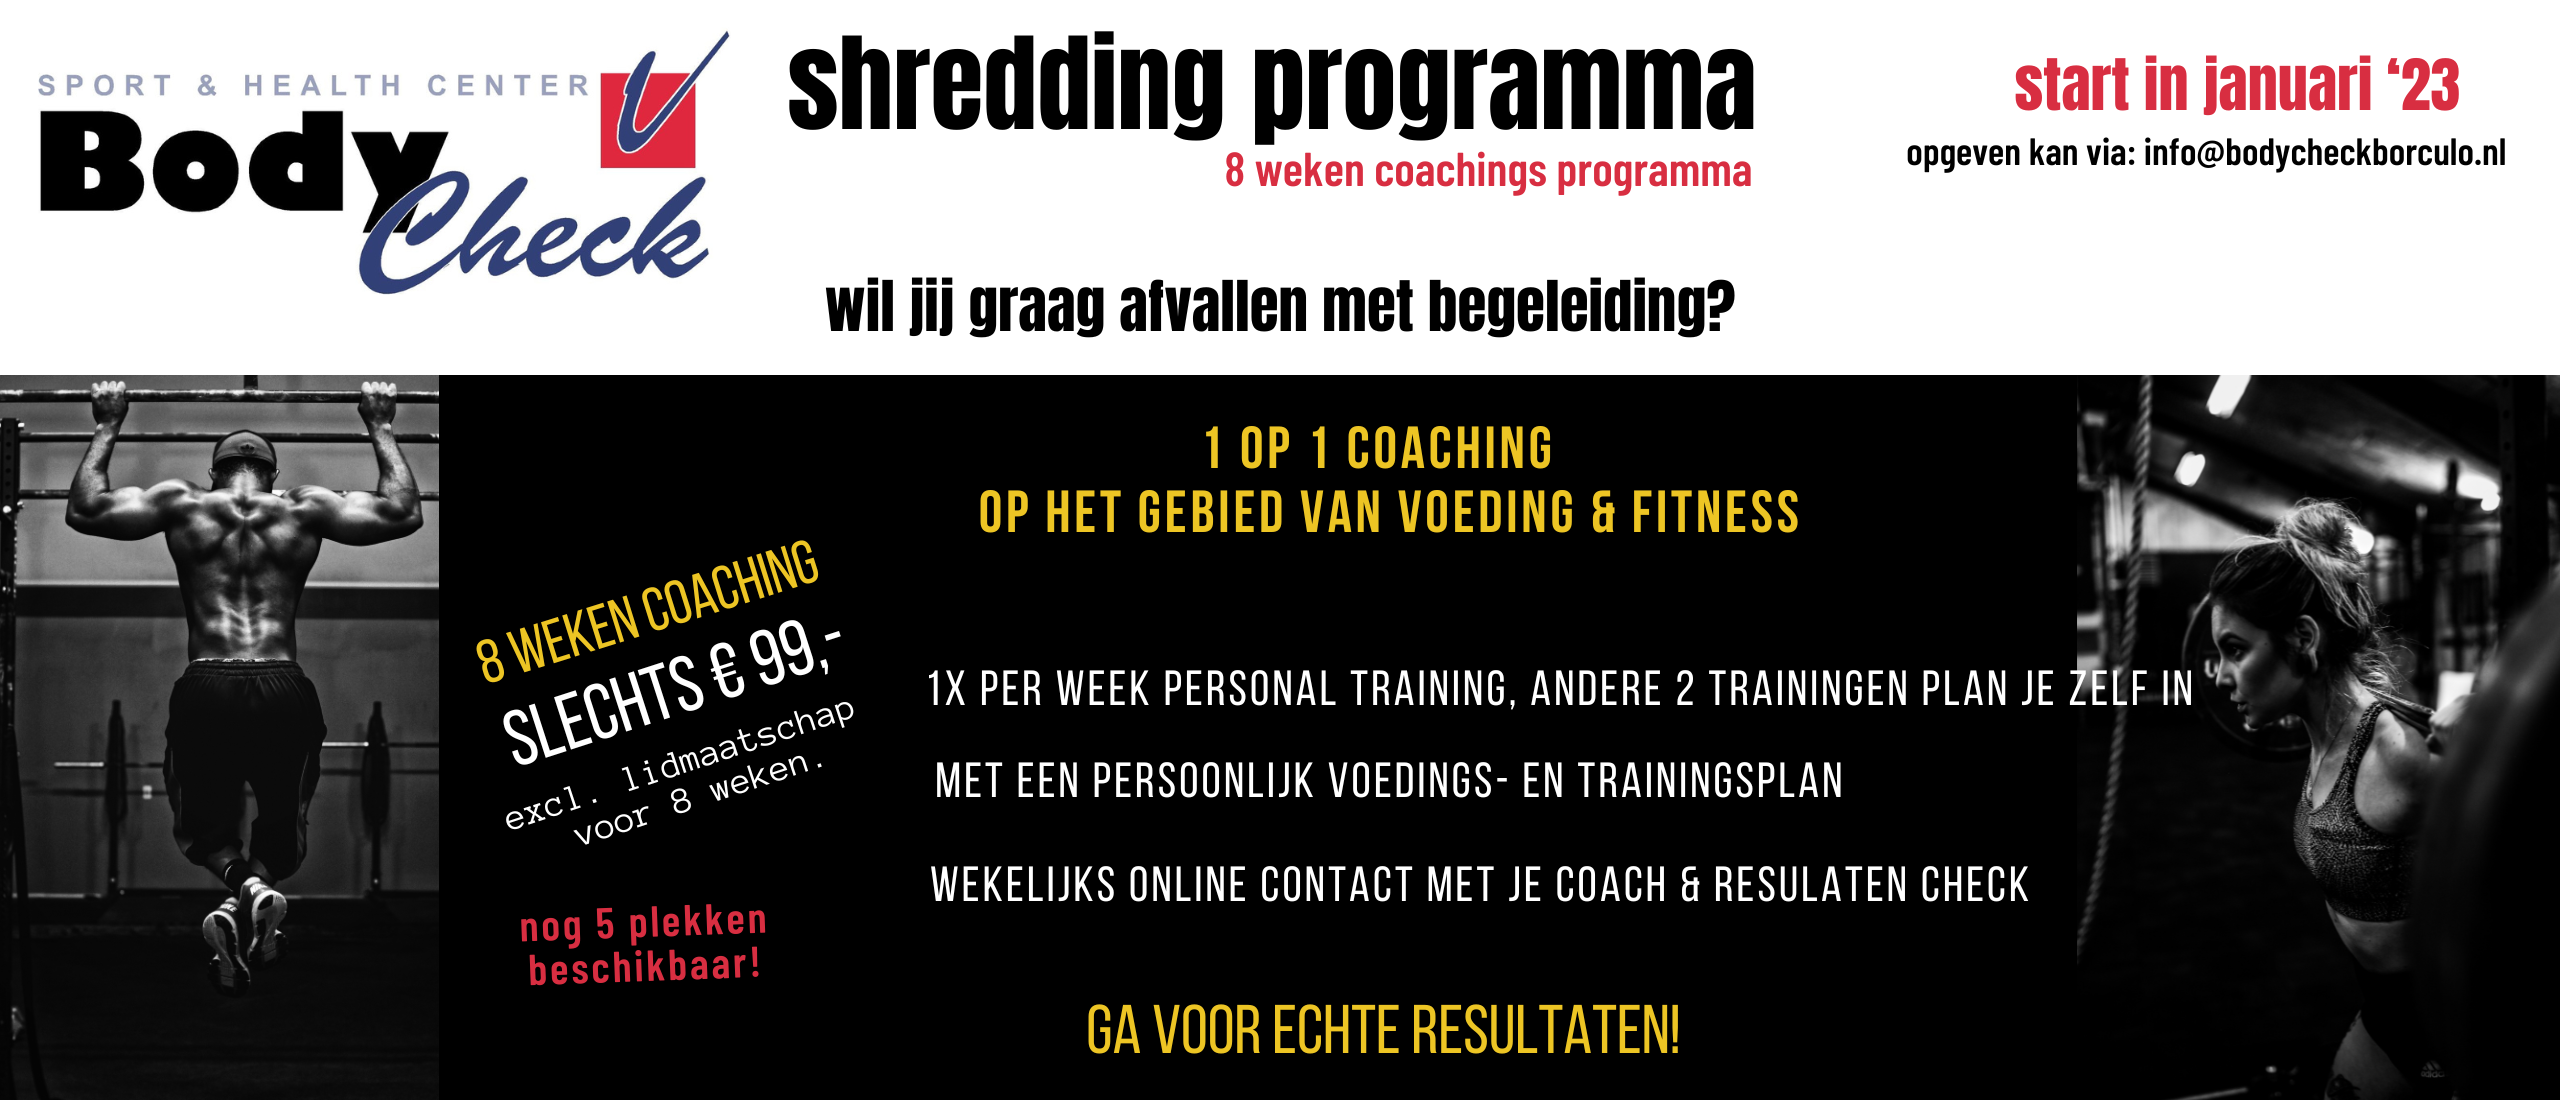 Shredding programma start in januari weer!